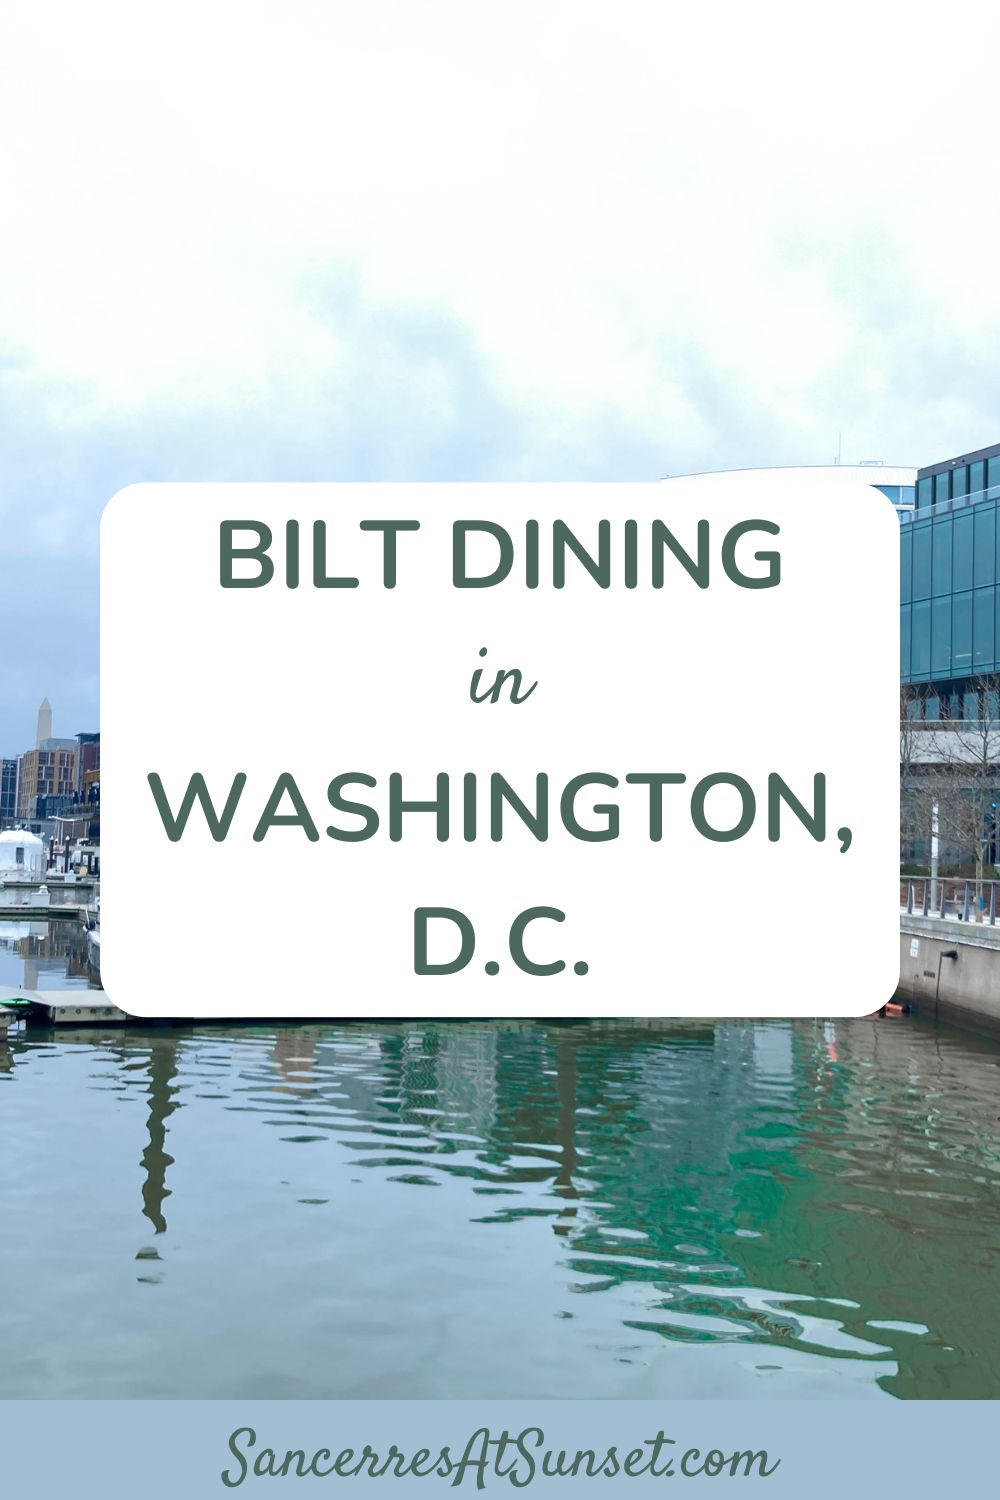 Bilt Dining Comes to Washington, D.C.